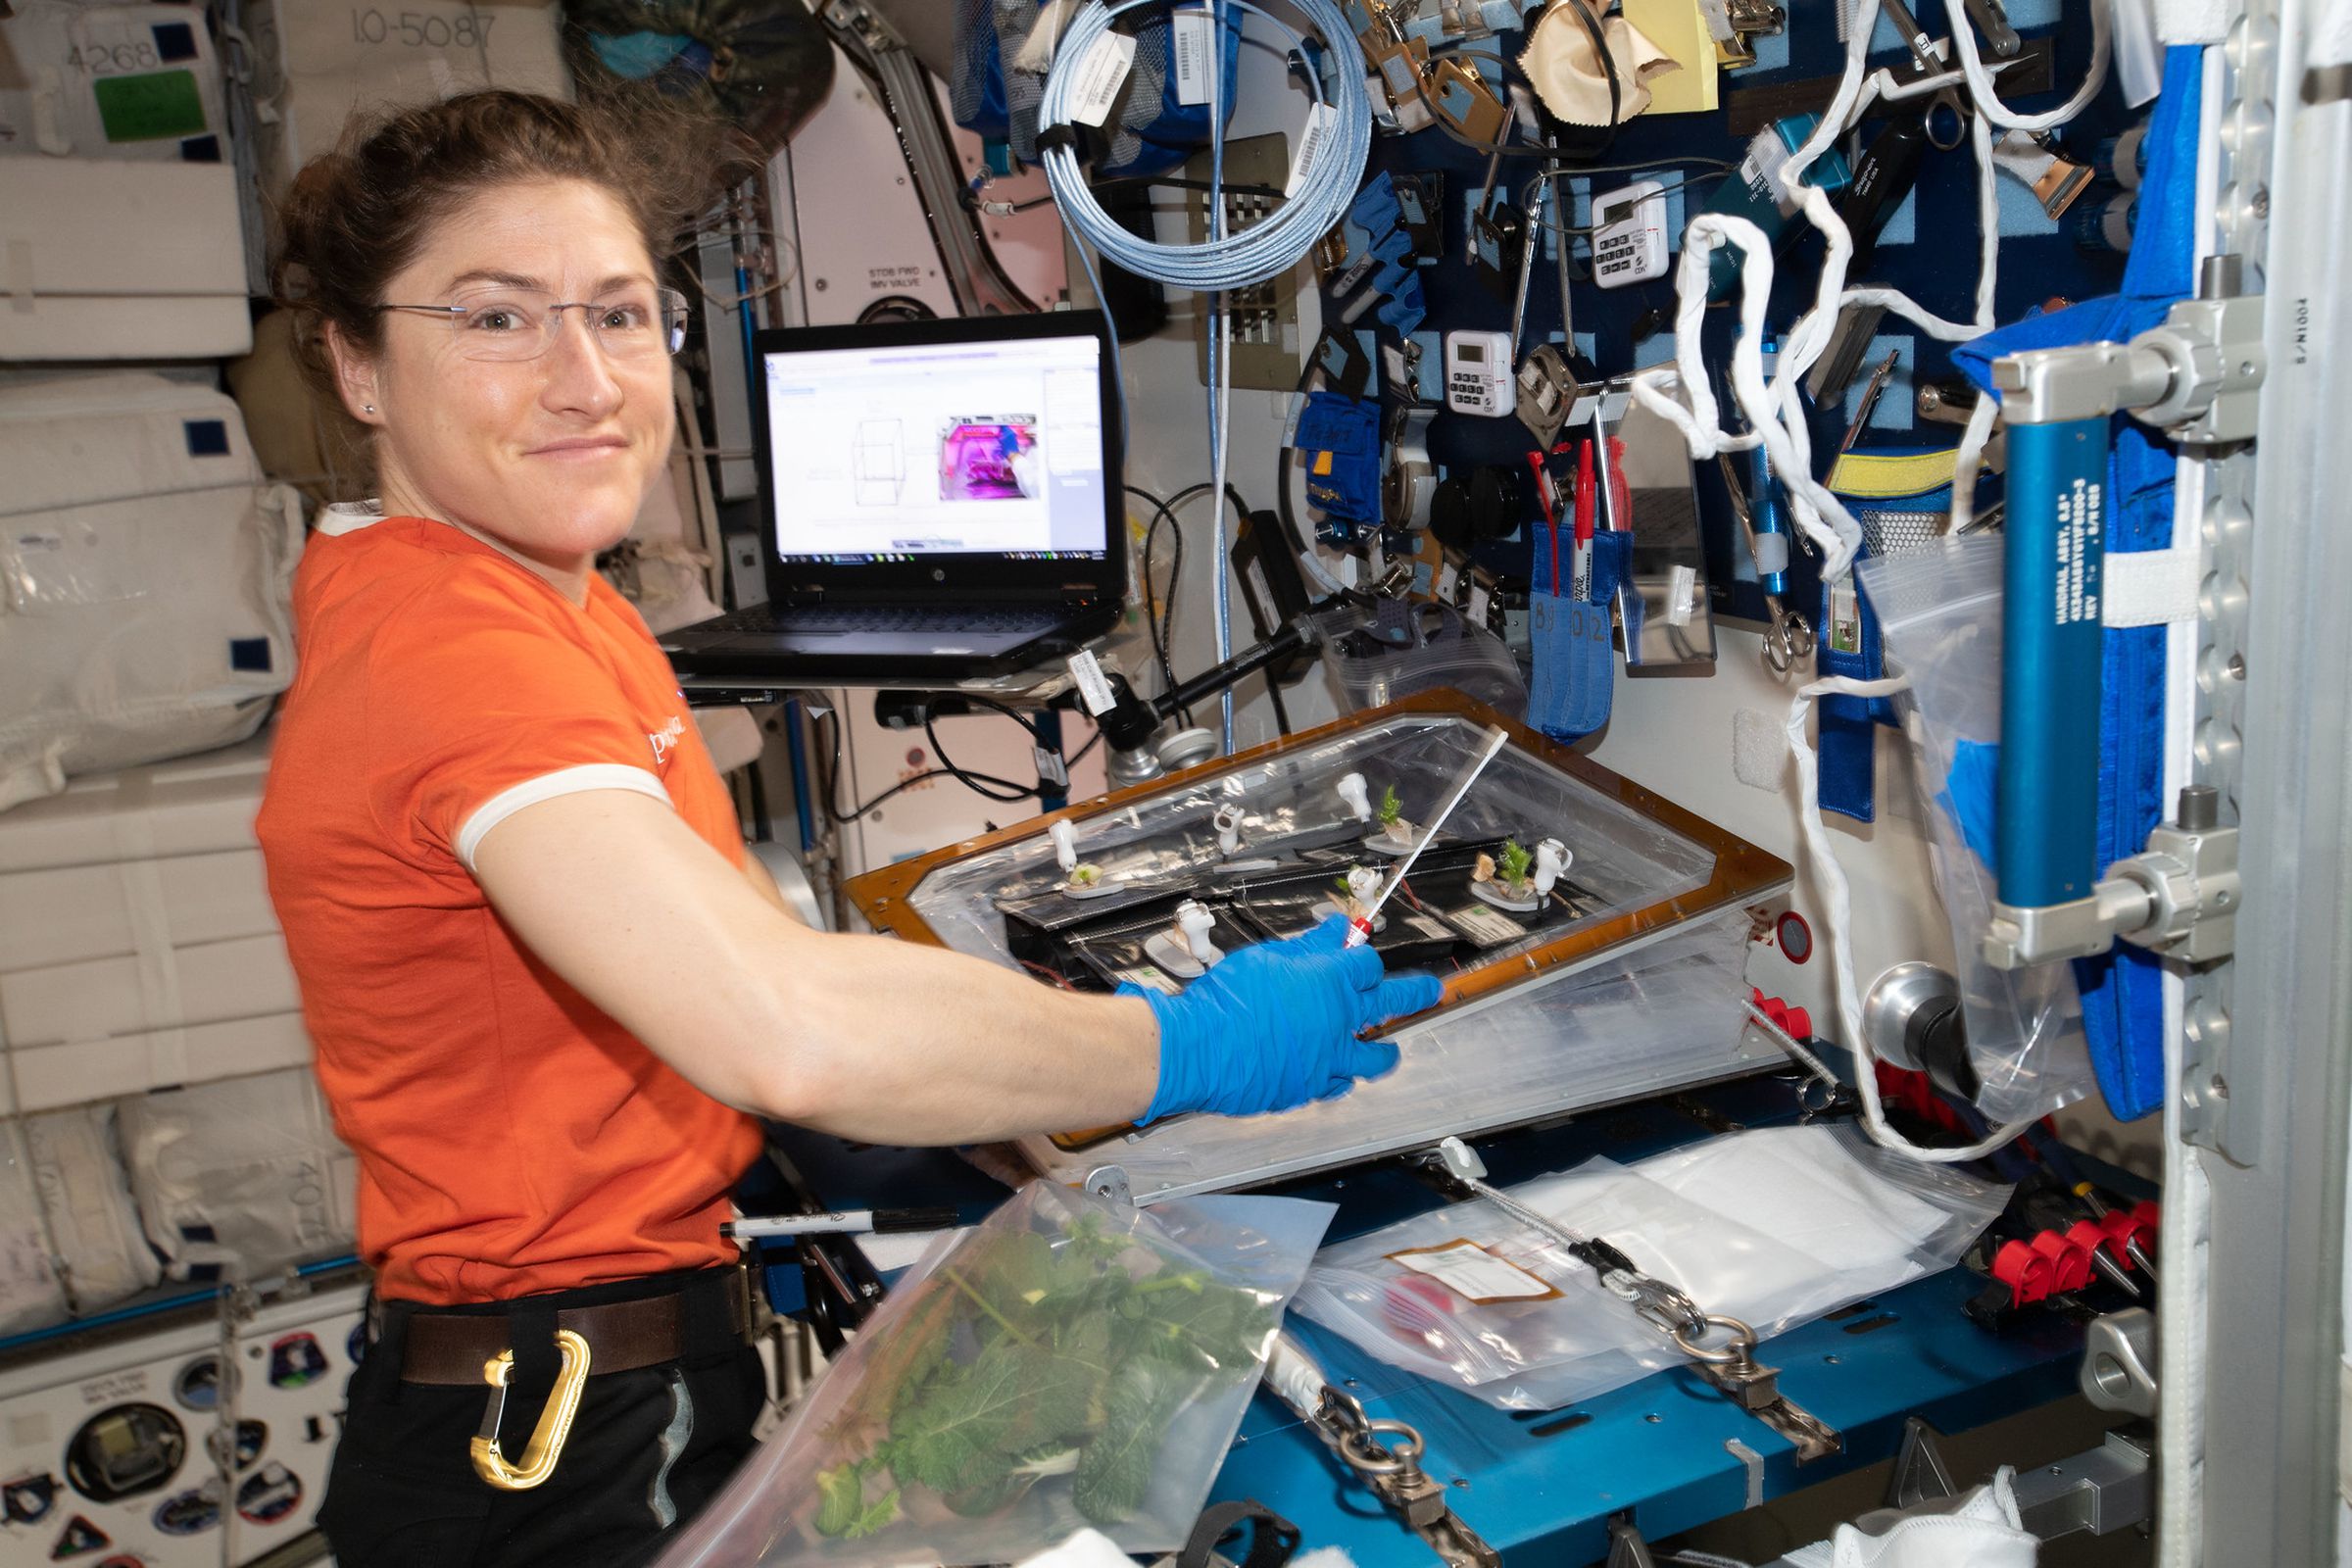 NASA astronaut Christina Koch on board the International Space Station.